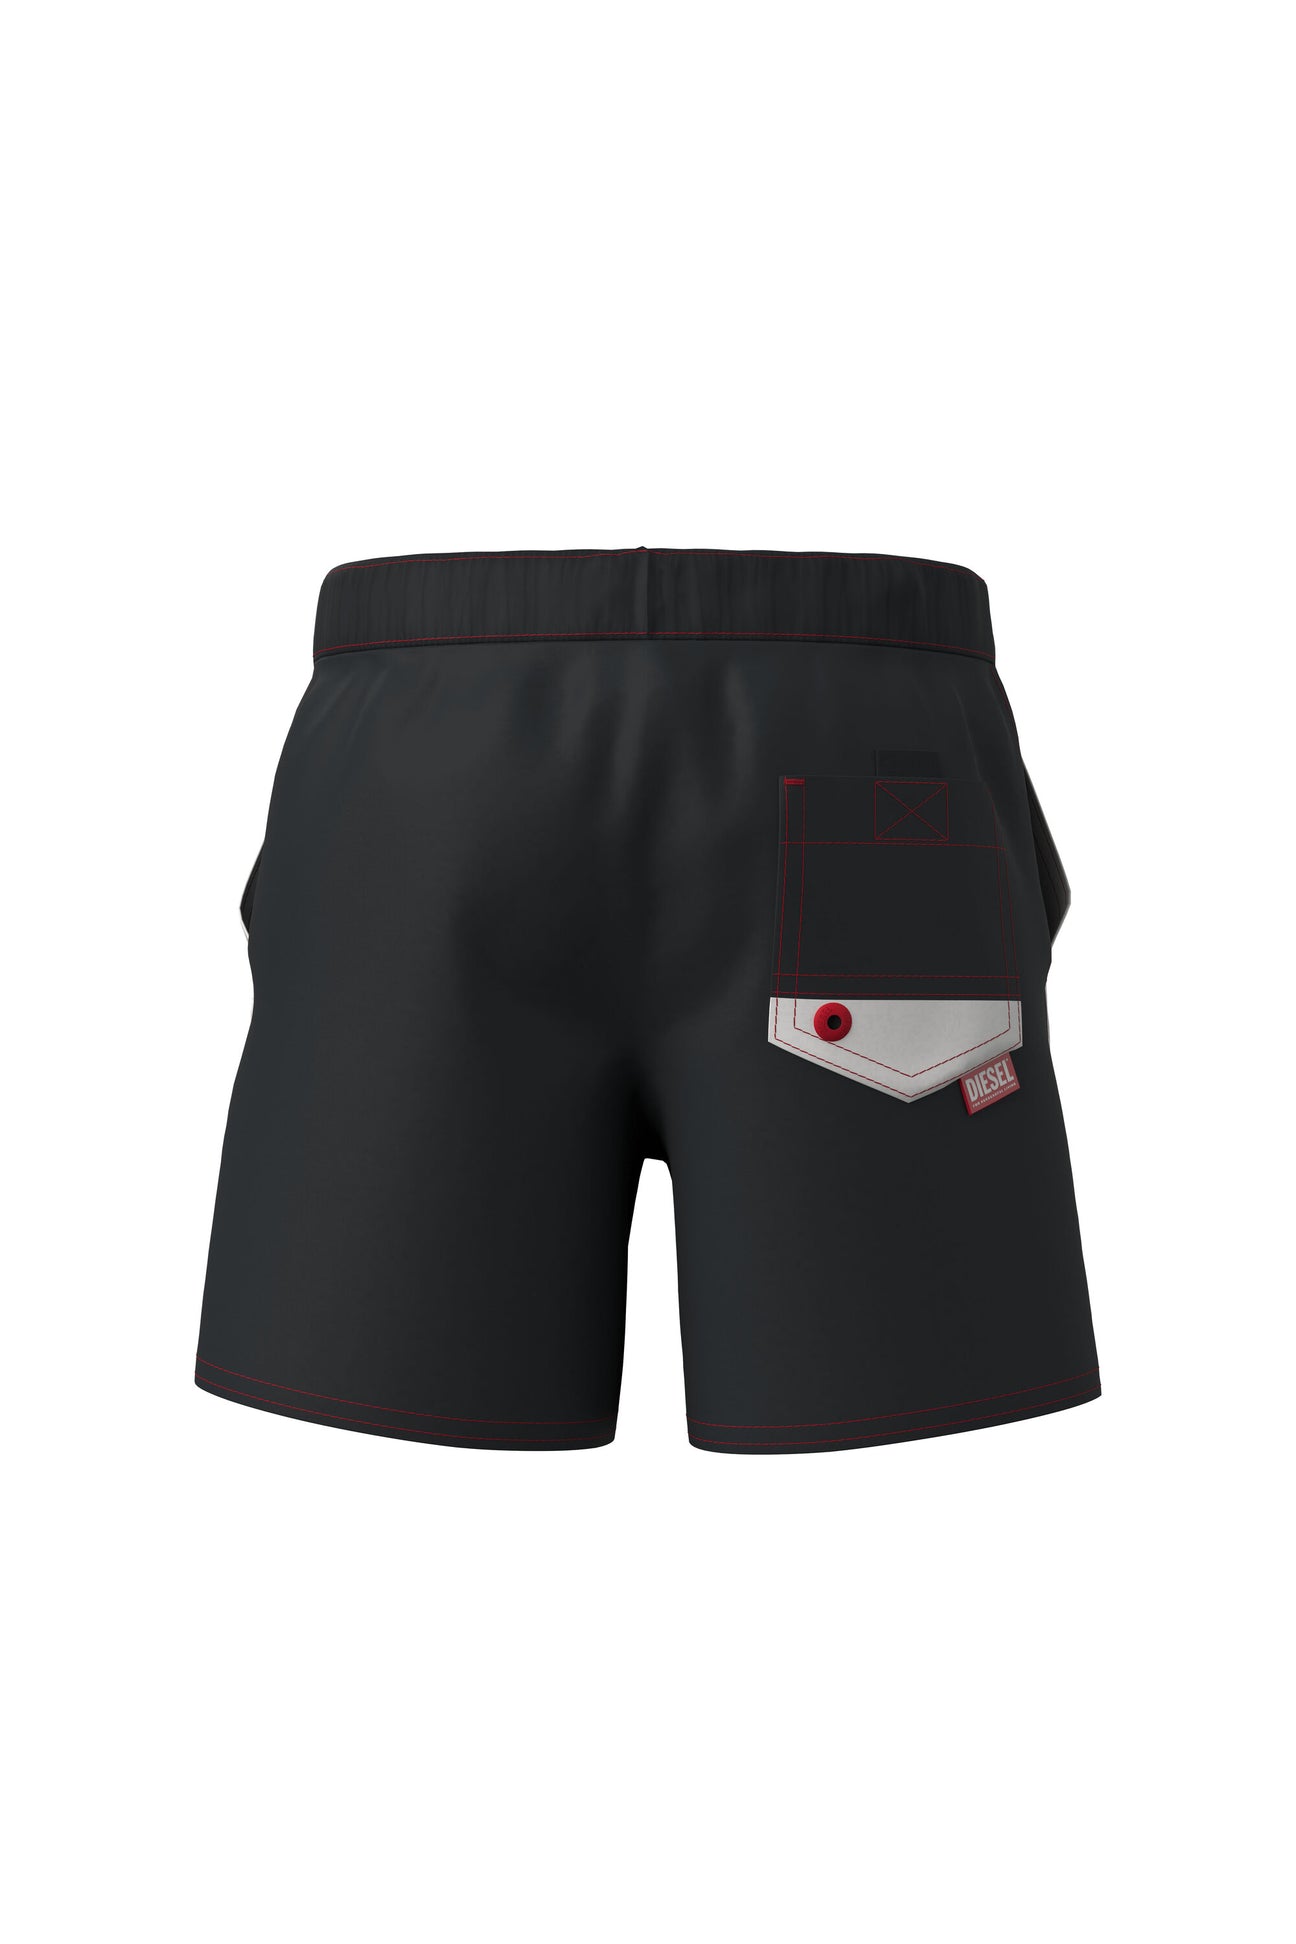 Black boxer shorts with logo and drawstring waistband Black boxer shorts with logo and drawstring waistband